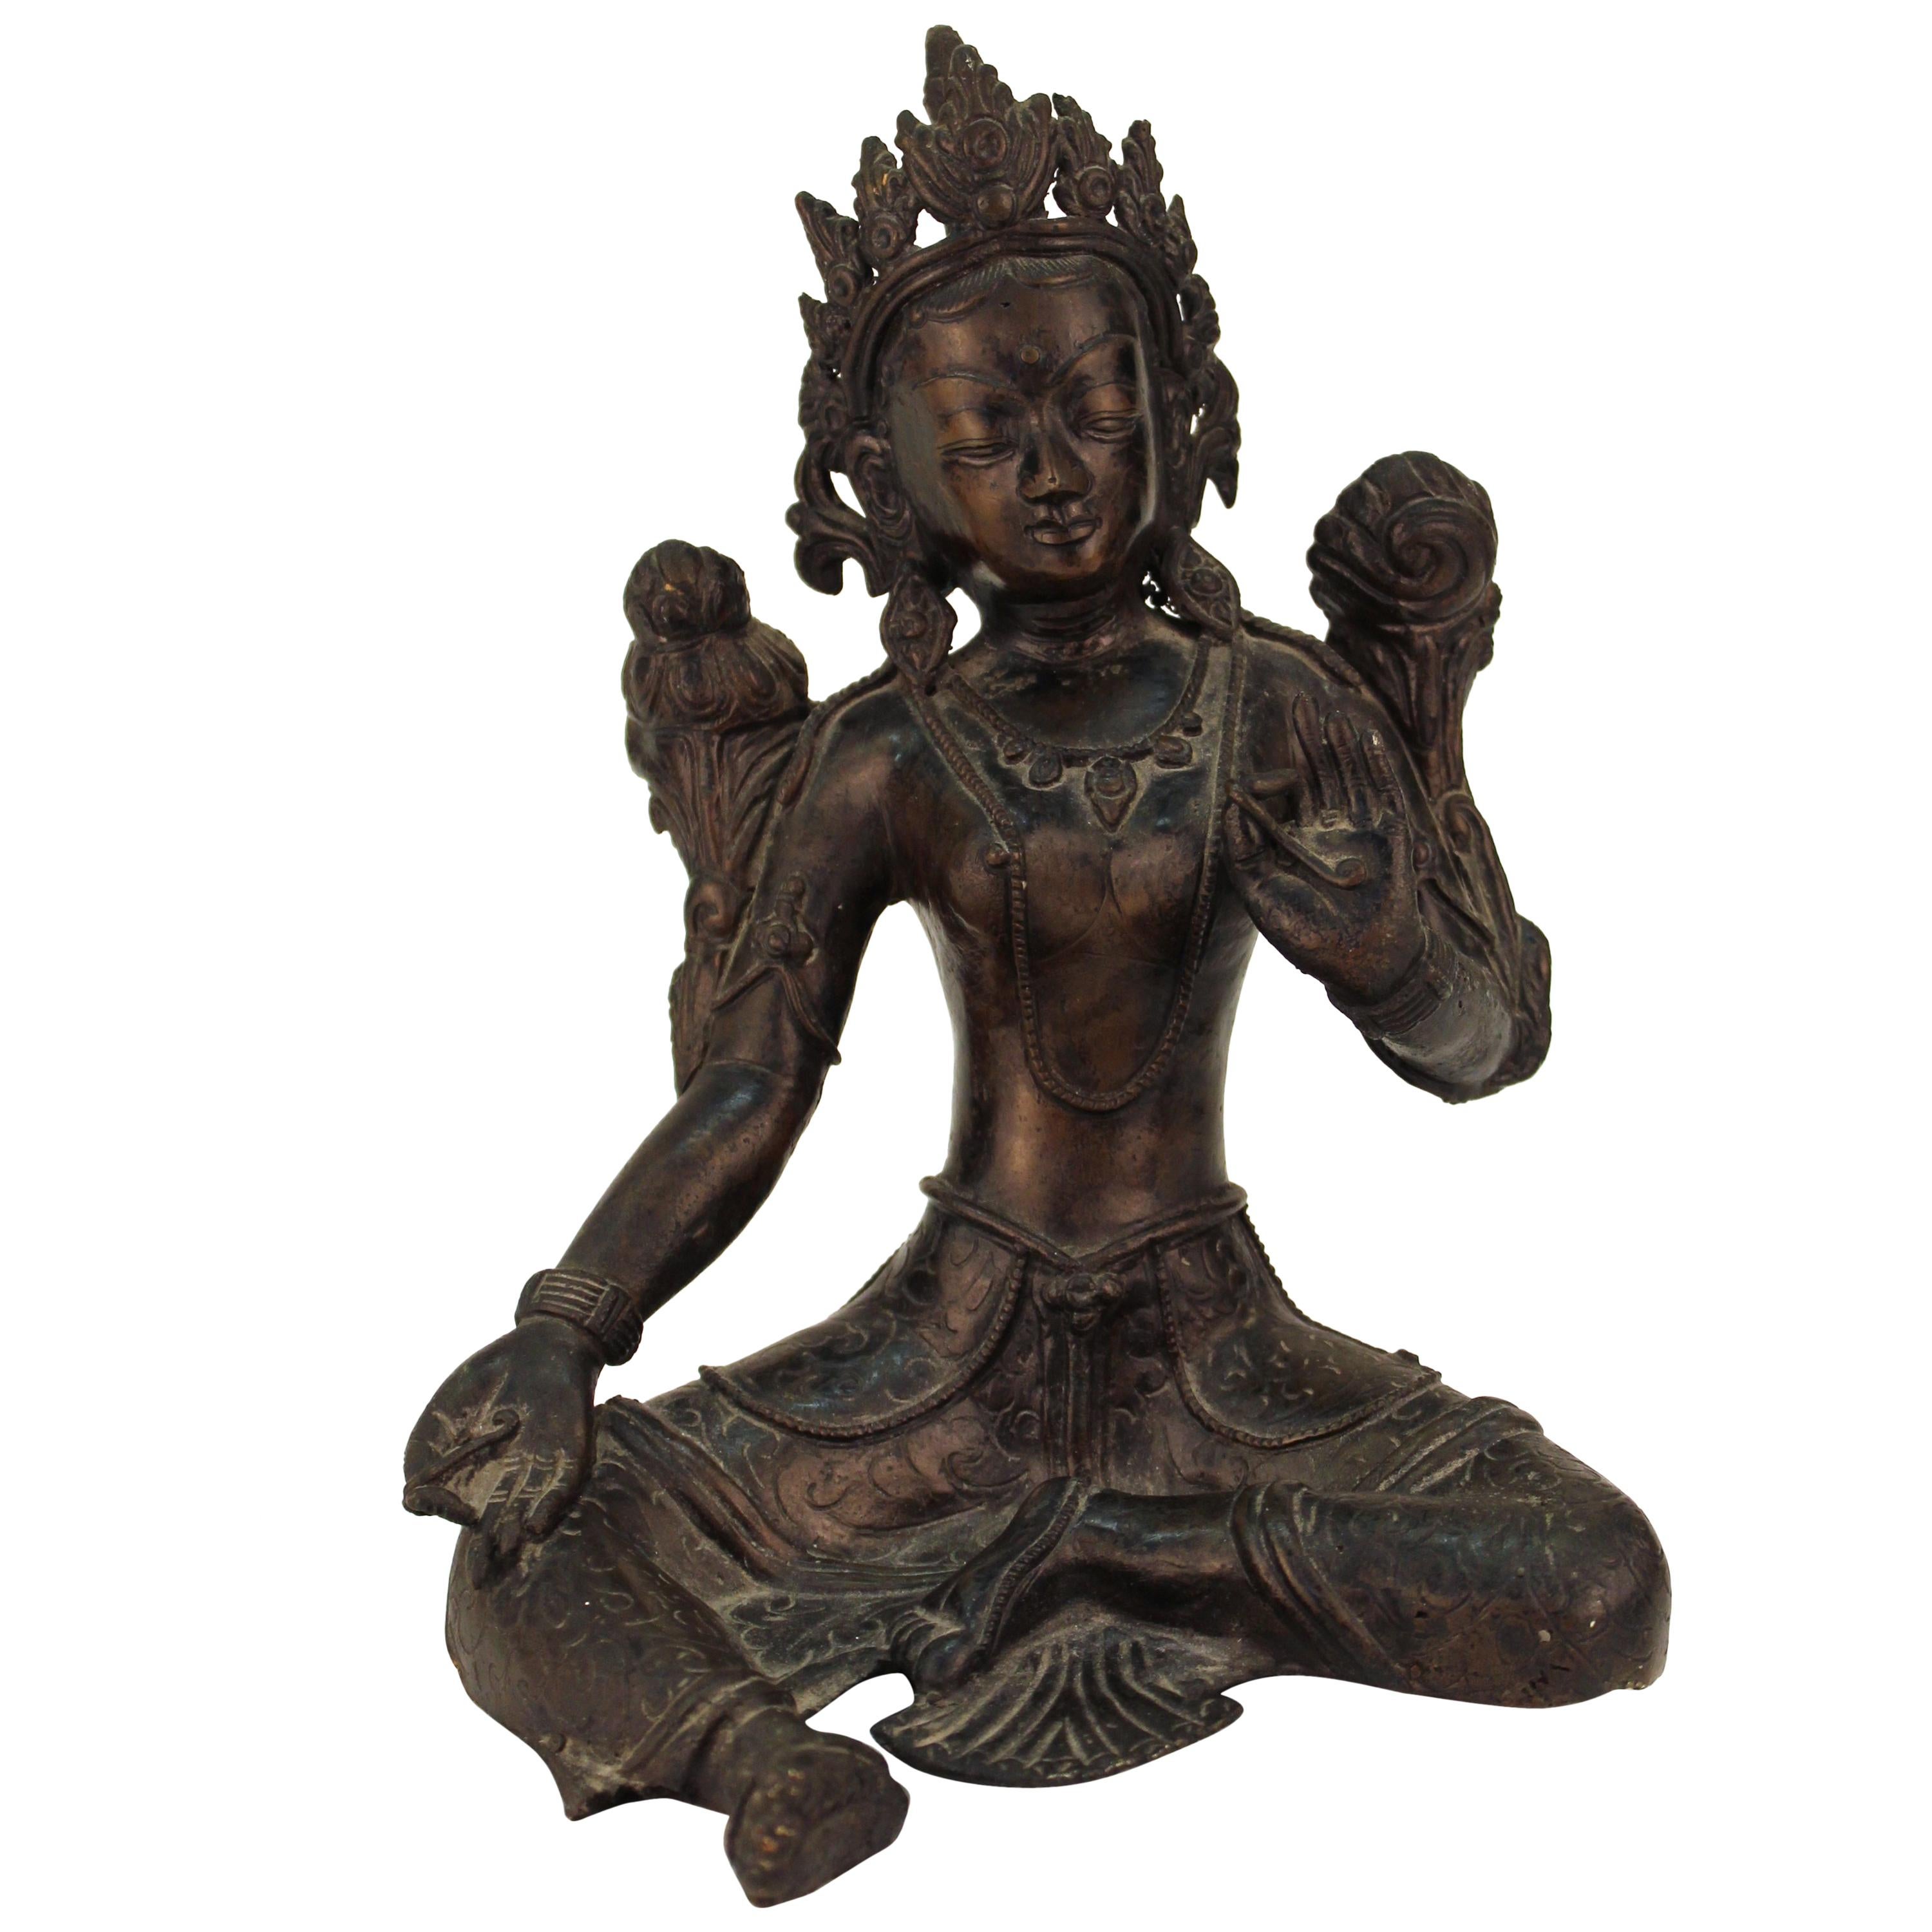 Tibetan Bronzed Metal Buddhist Sculpture of the Seated Bodhisattva Tara